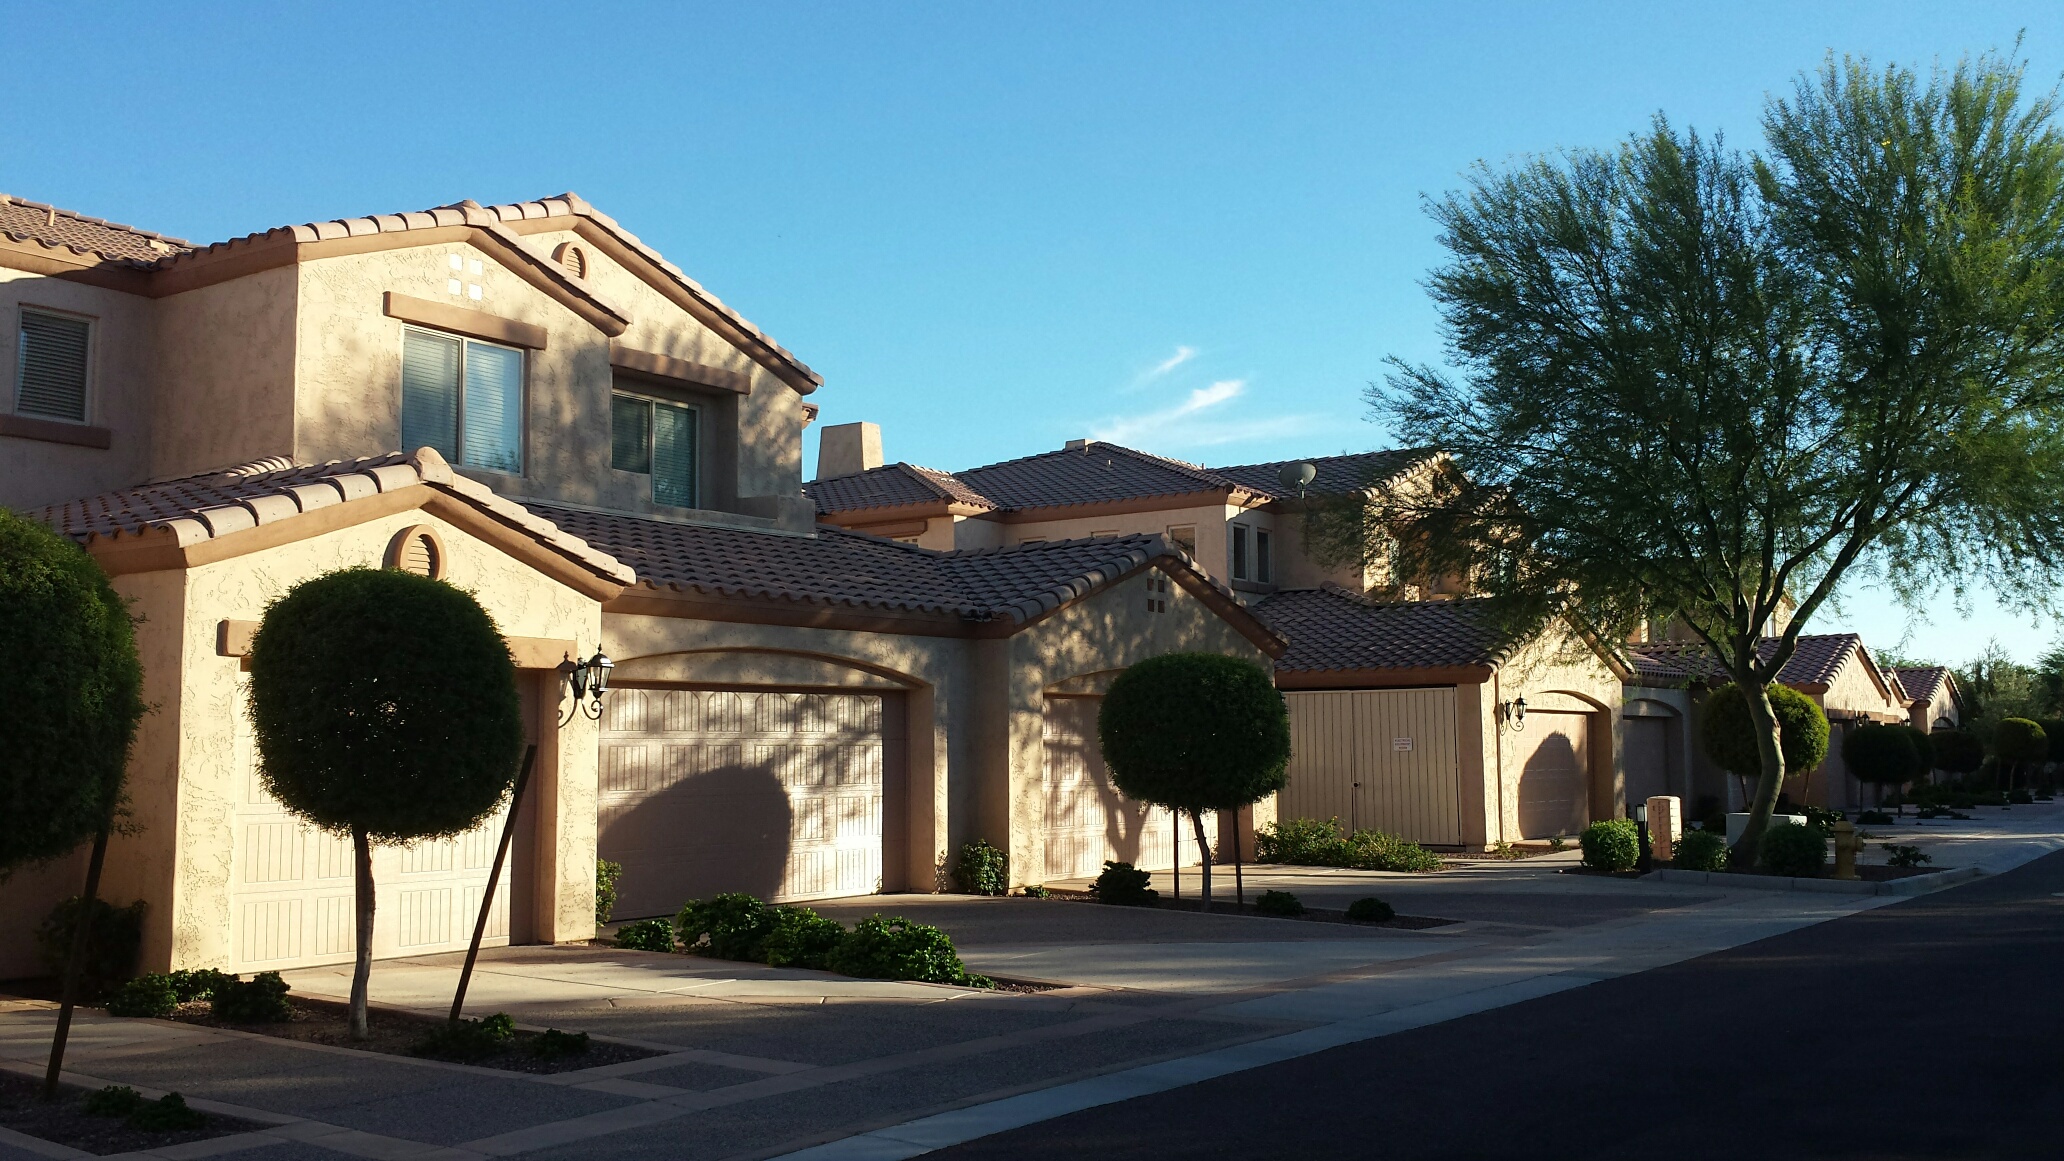 Carino Villas For Sale in Chandler, AZ | Phoenix CondoWave